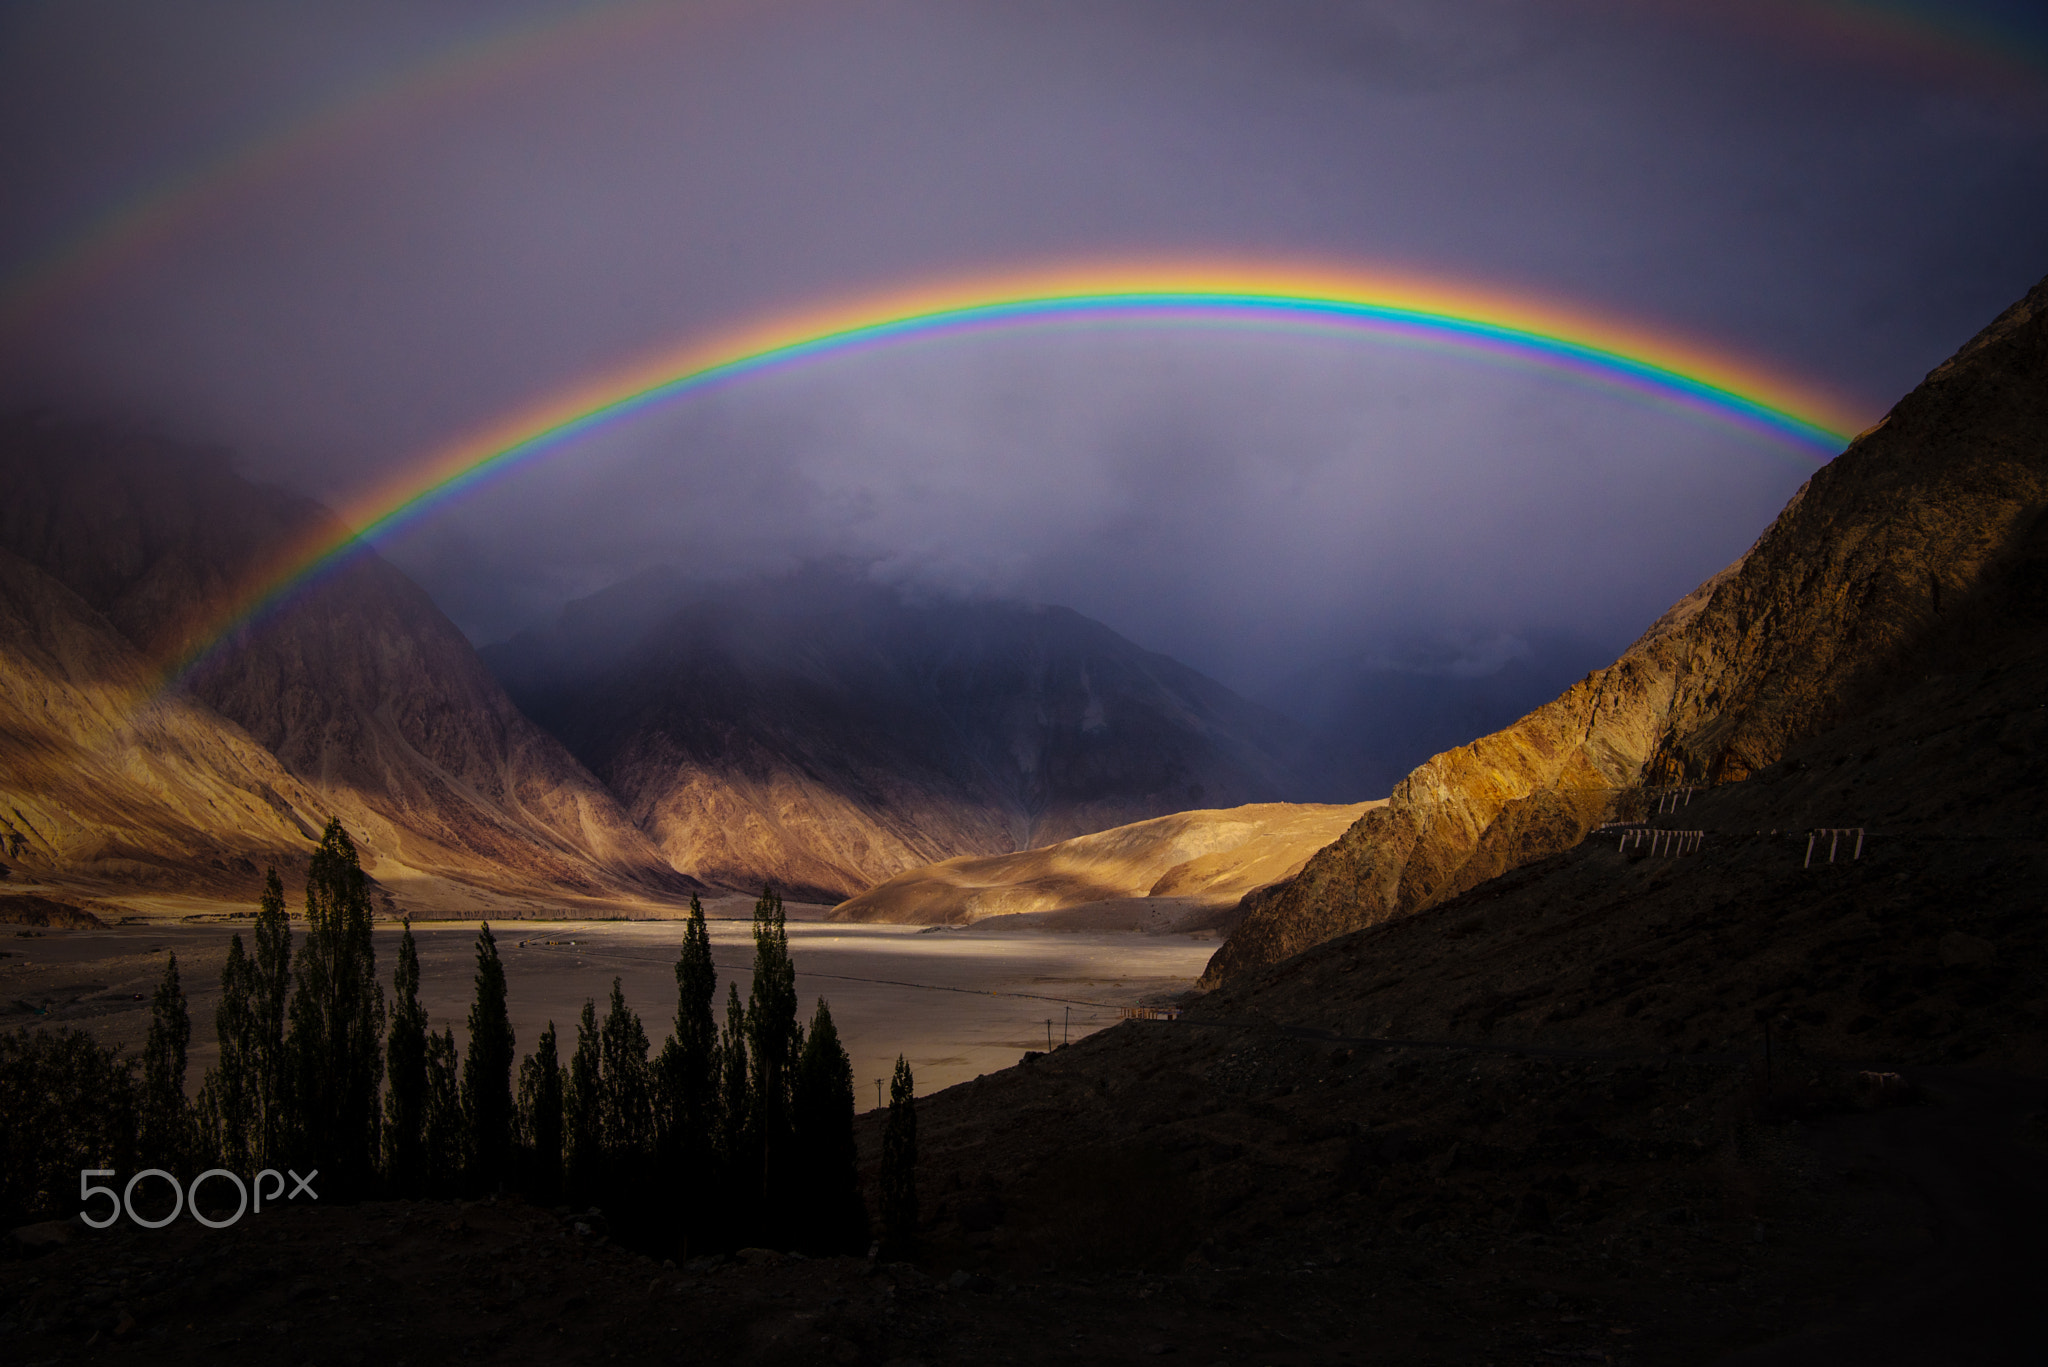 rainbow by Nagesh Jeware on 500px.com